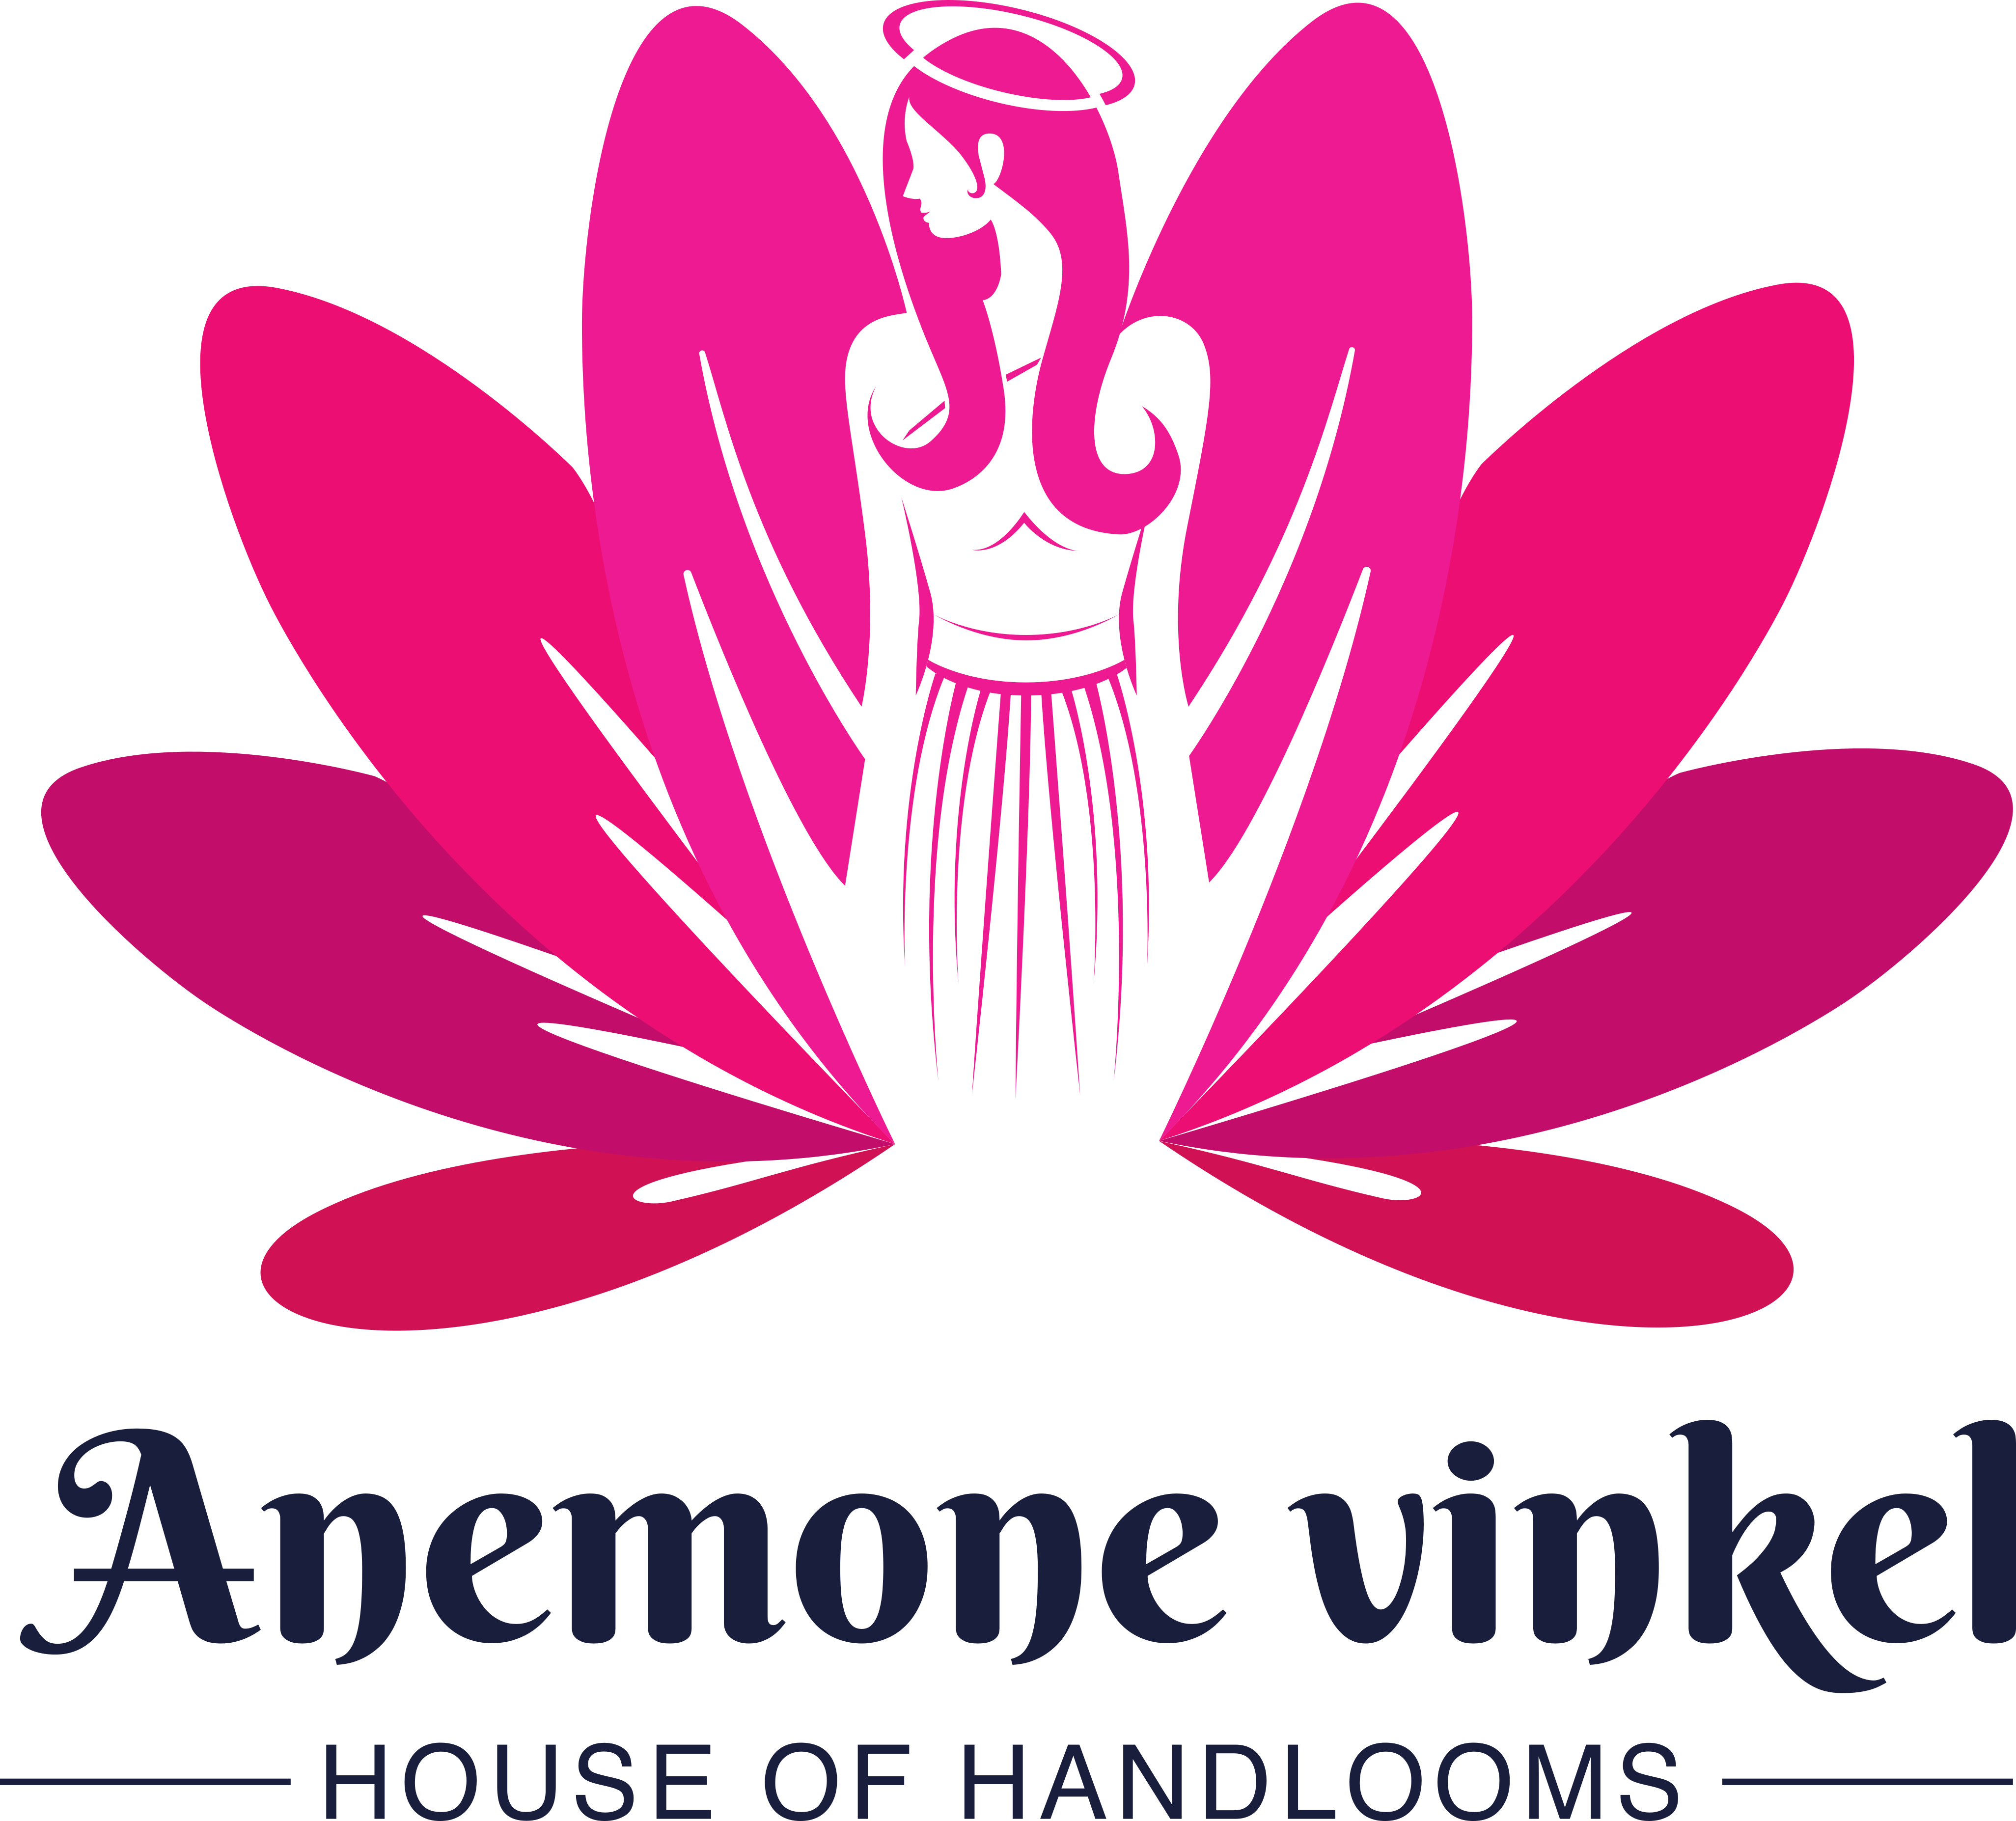 Anemone Vinkel